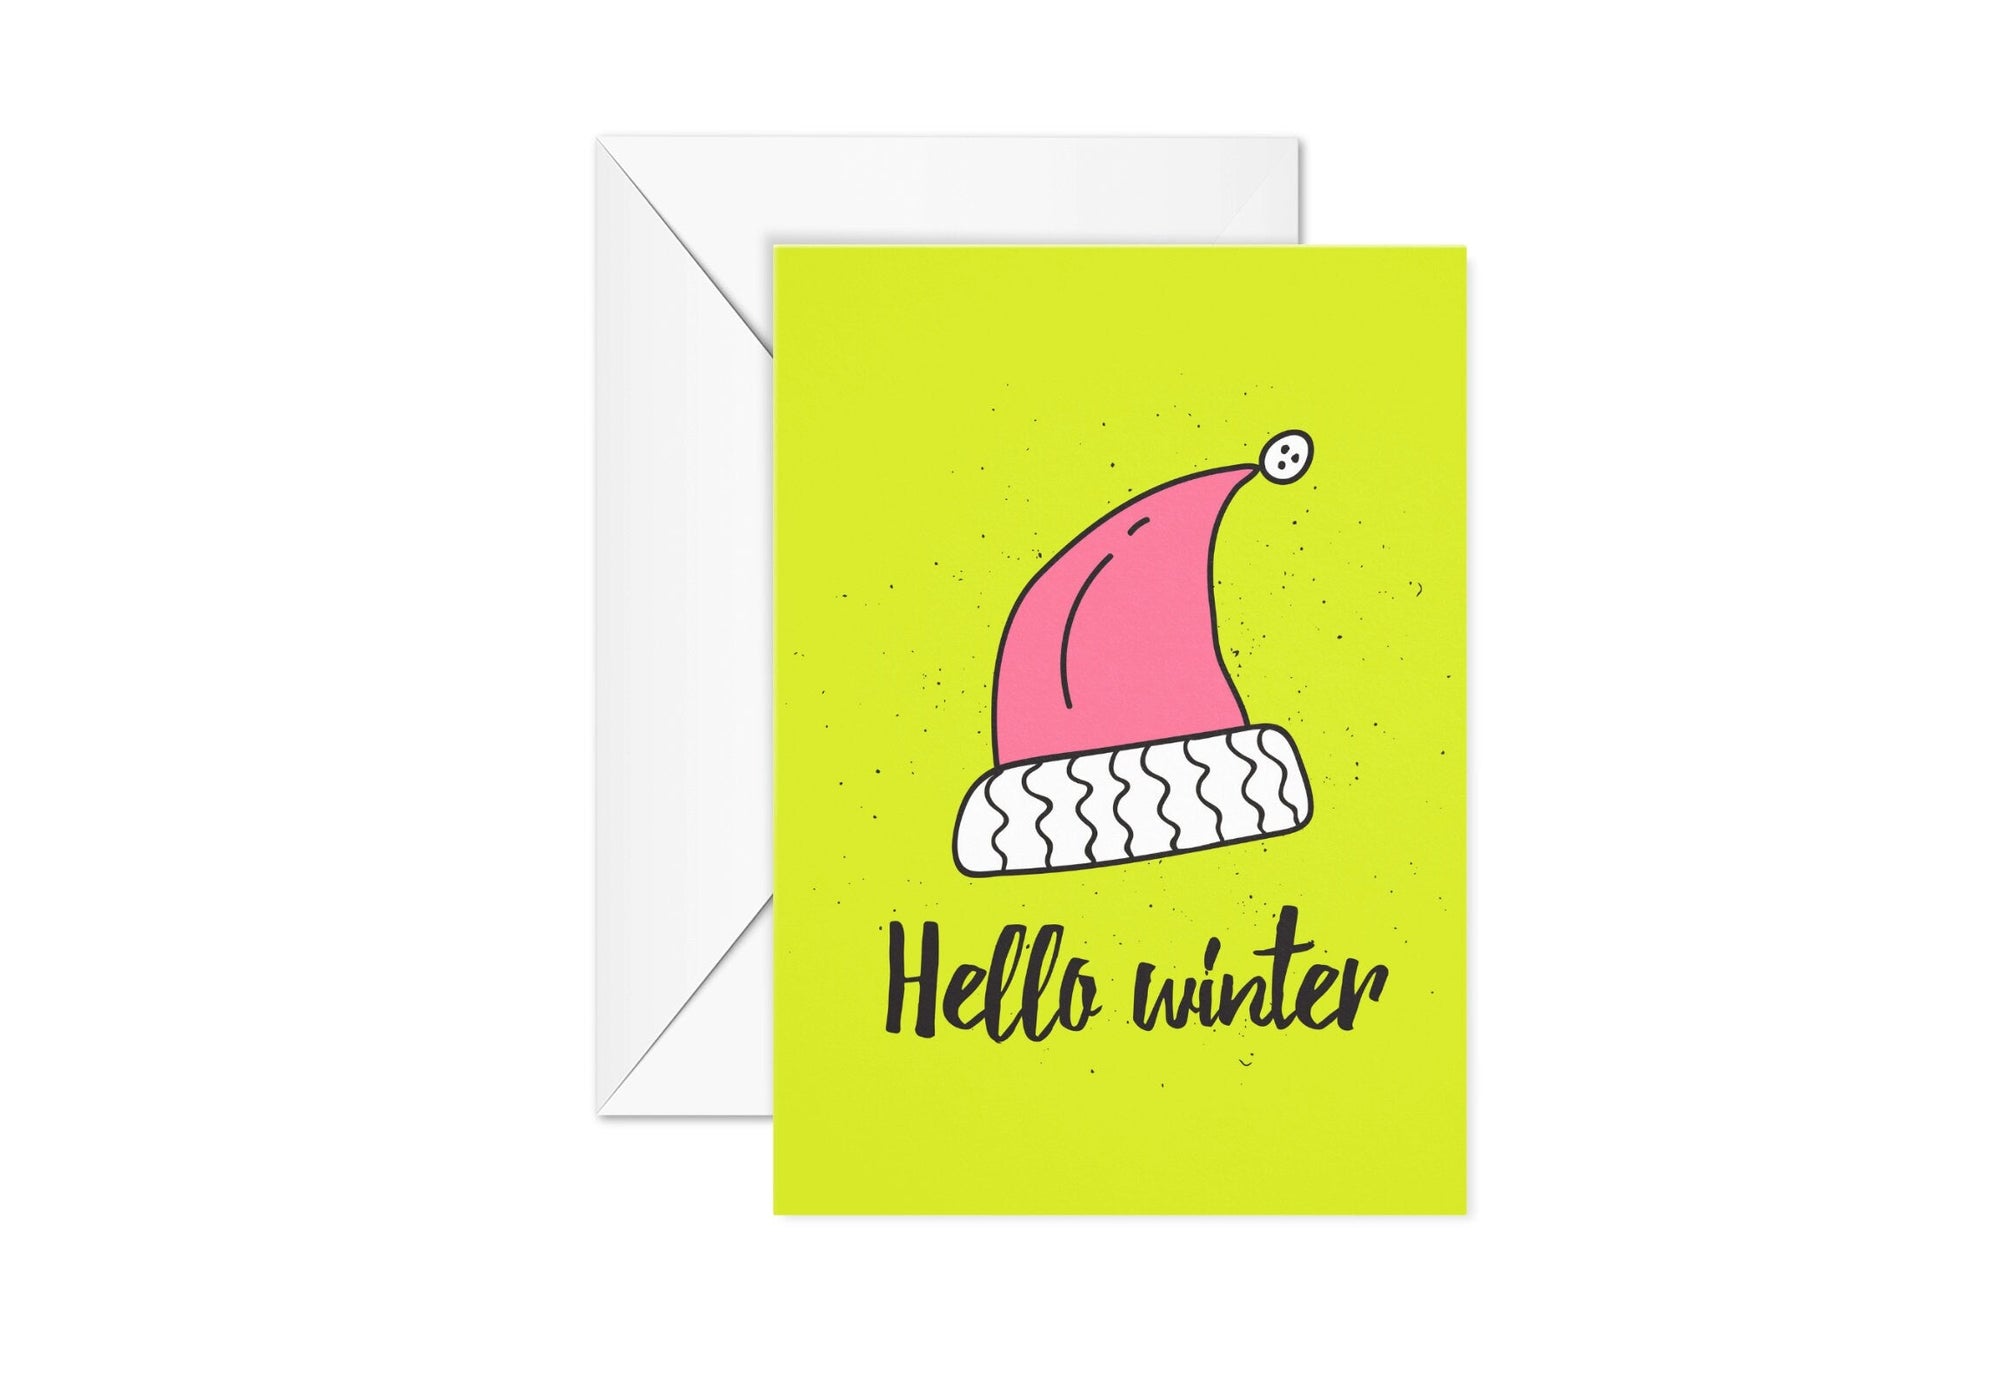 Hello Winter Greeting Card Violagrace-174 